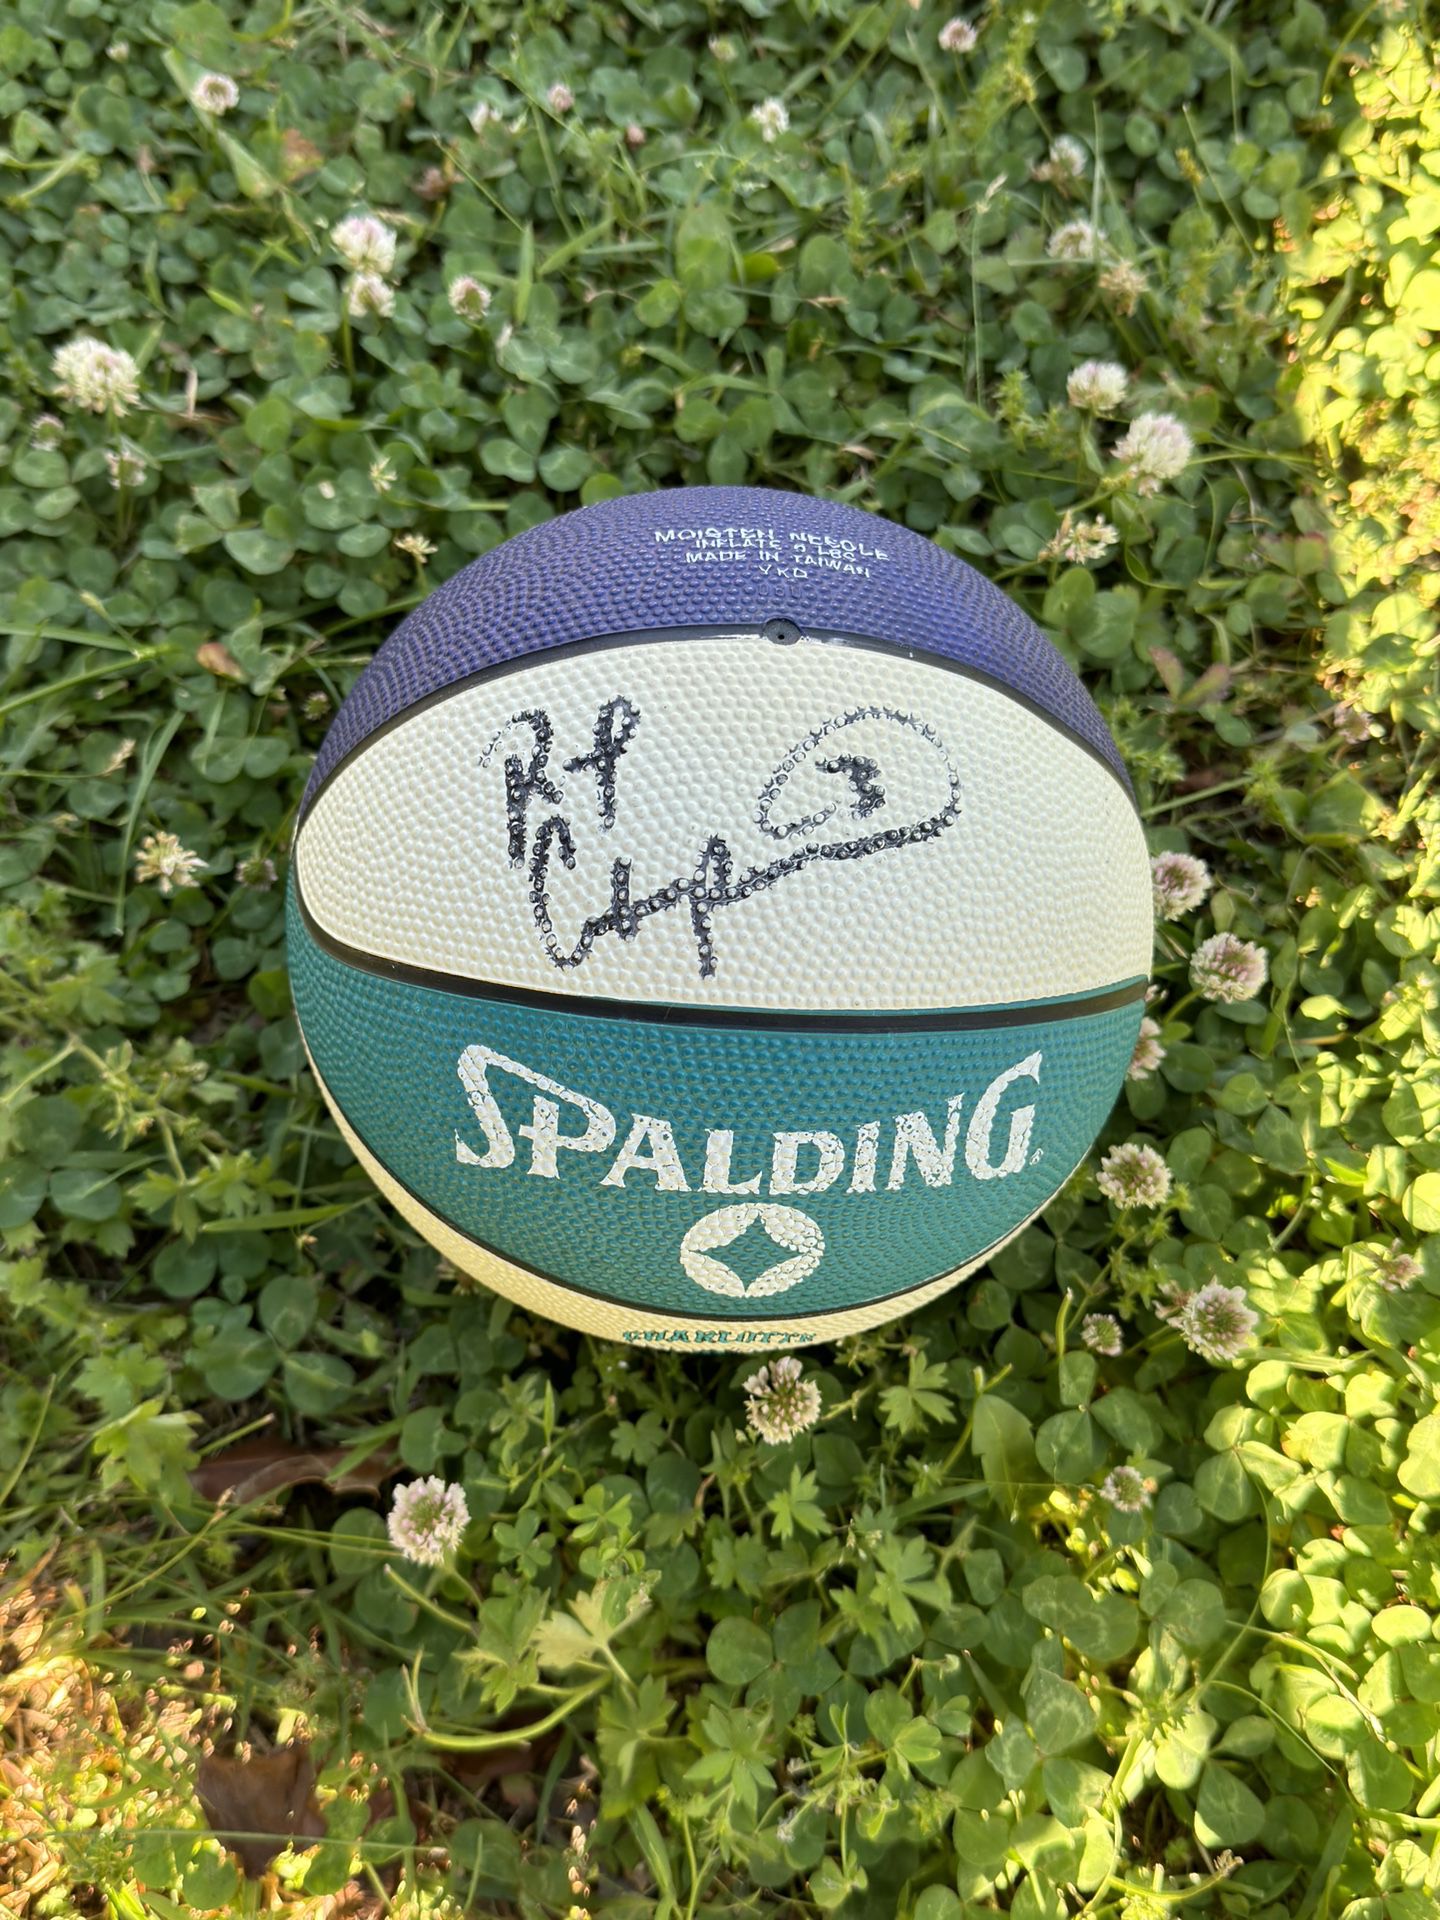 charlotte hornets mini basketball Rex Chapman autograph